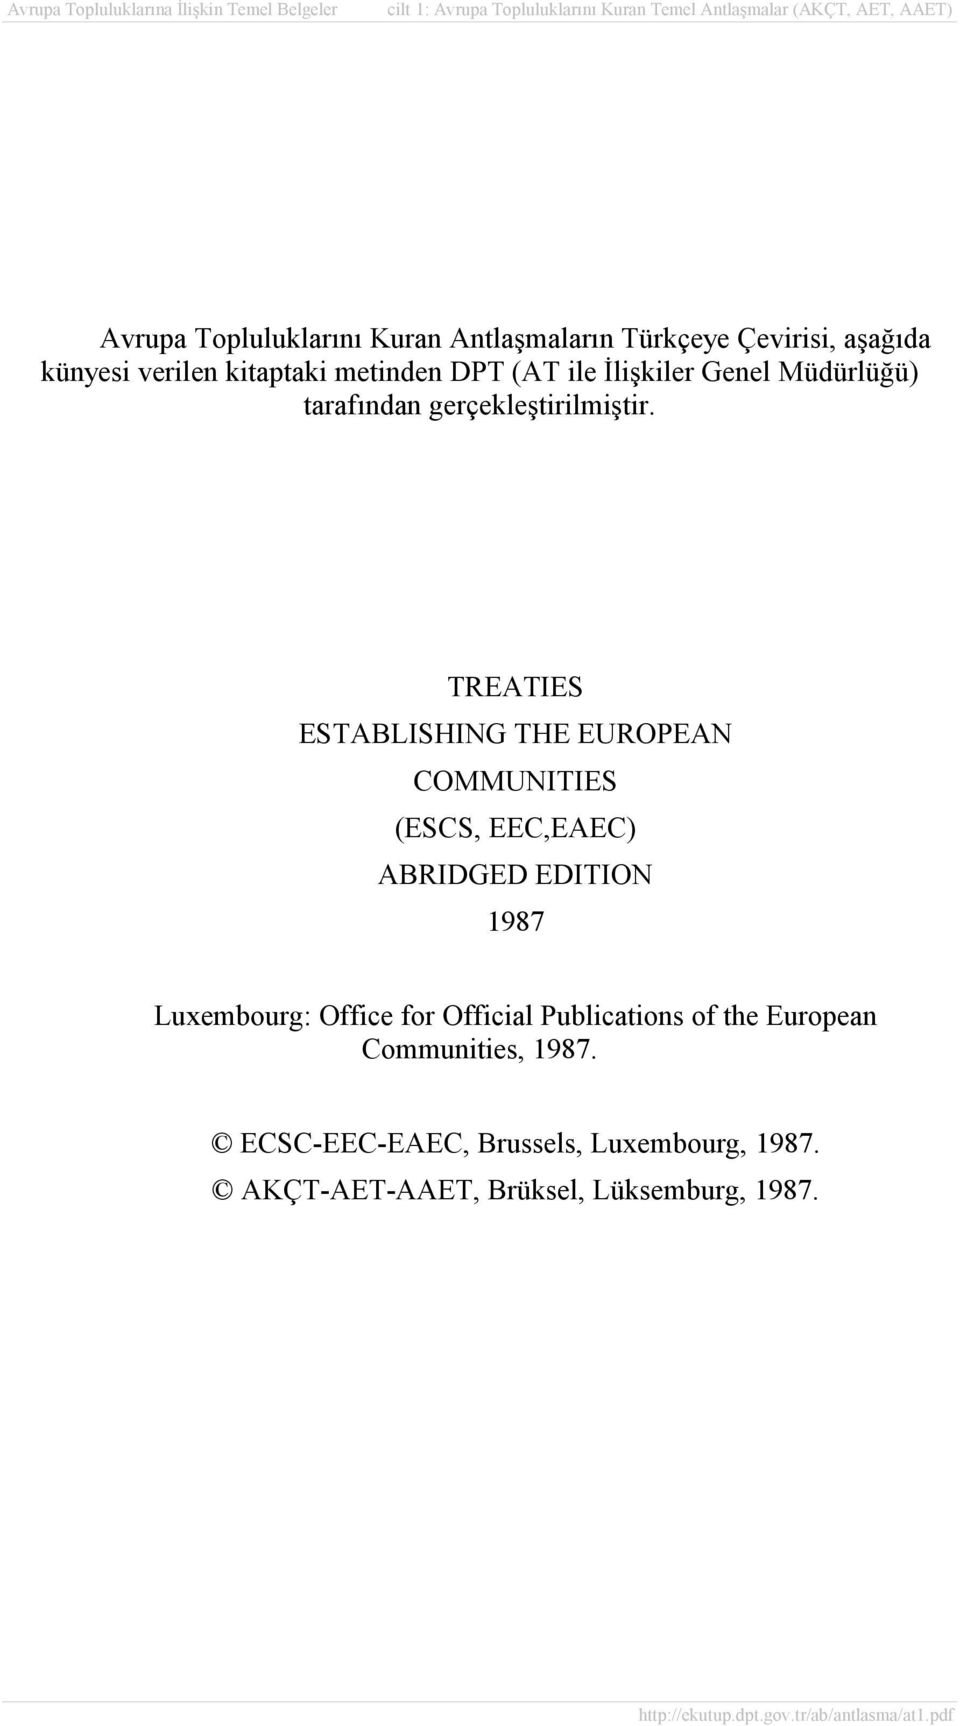 TREATIES ESTABLISHING THE EUROPEAN COMMUNITIES (ESCS, EEC,EAEC) ABRIDGED EDITION 1987 Luxembourg: Office